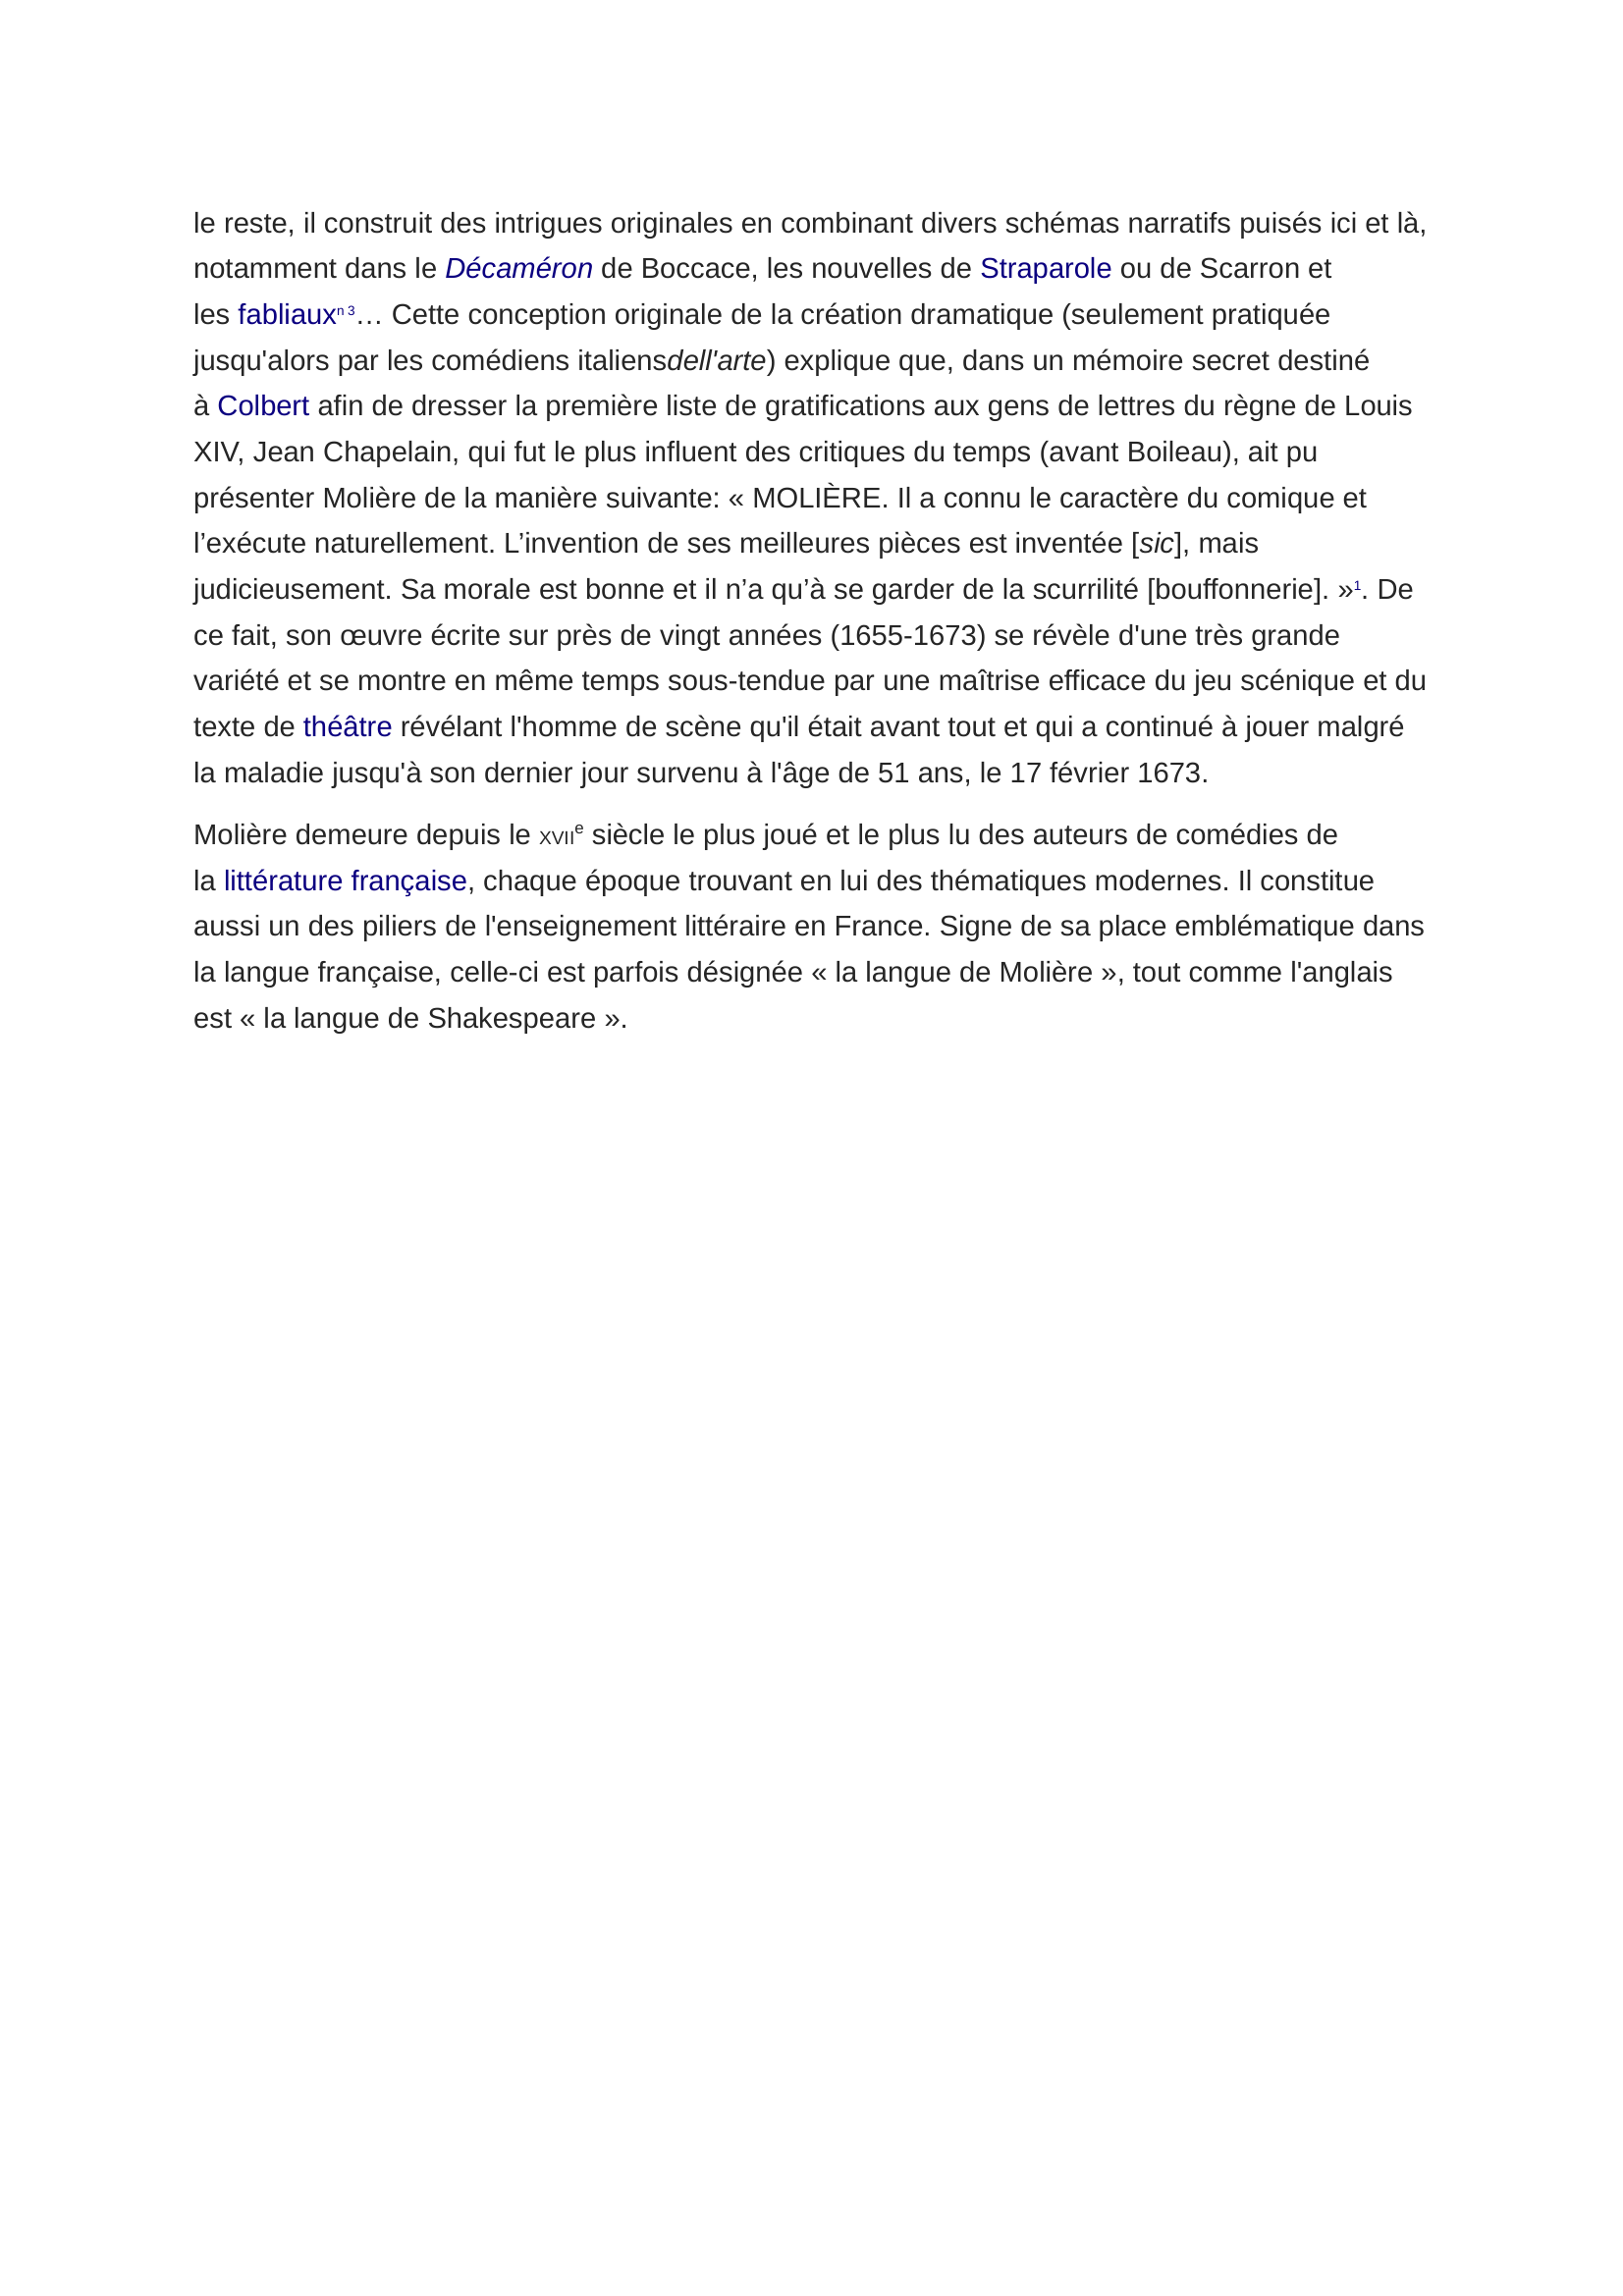 Prévisualisation du document moliere source wikipedia